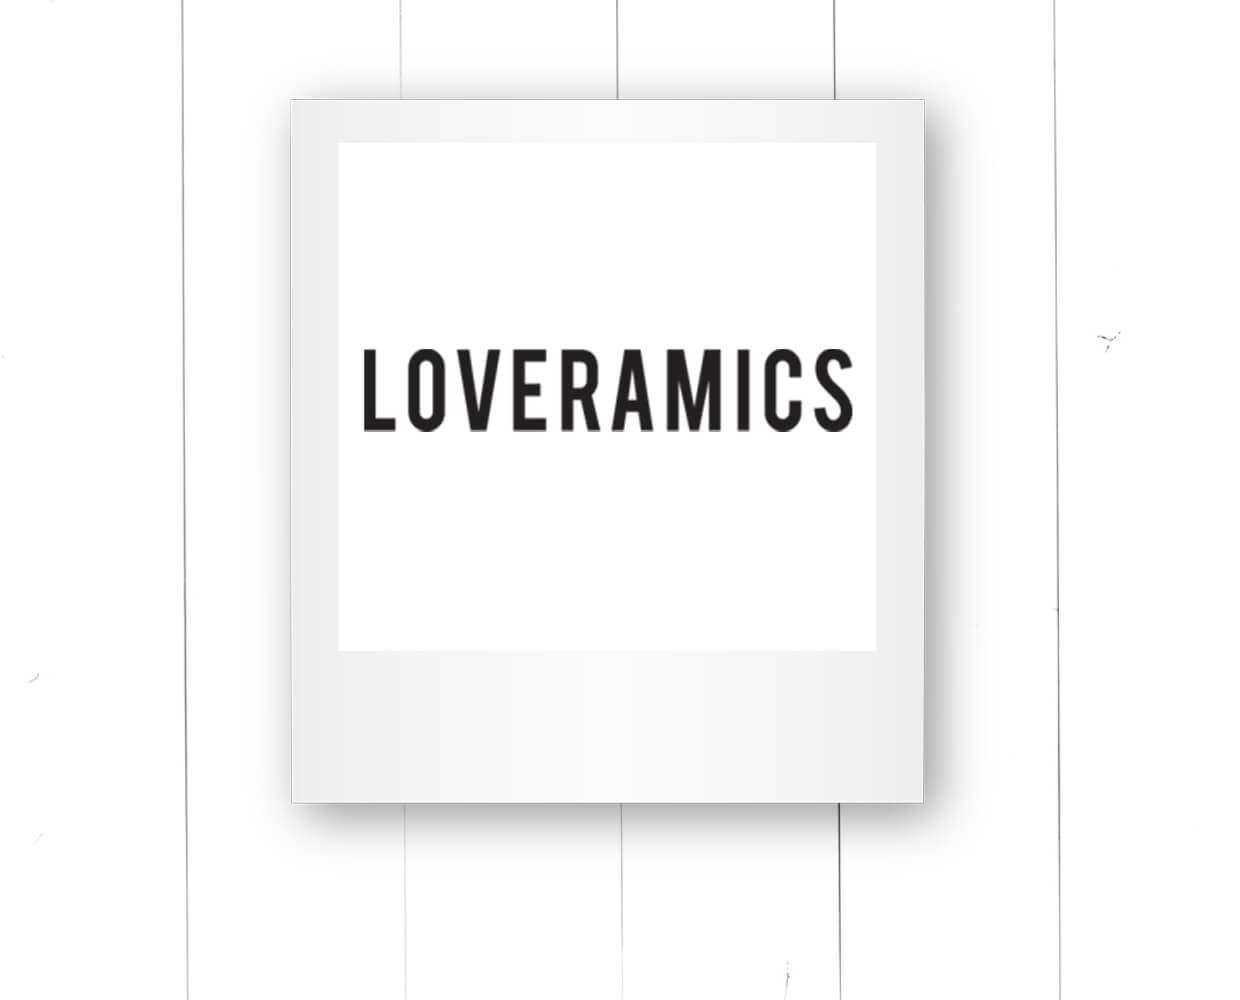 Loveramics Logo